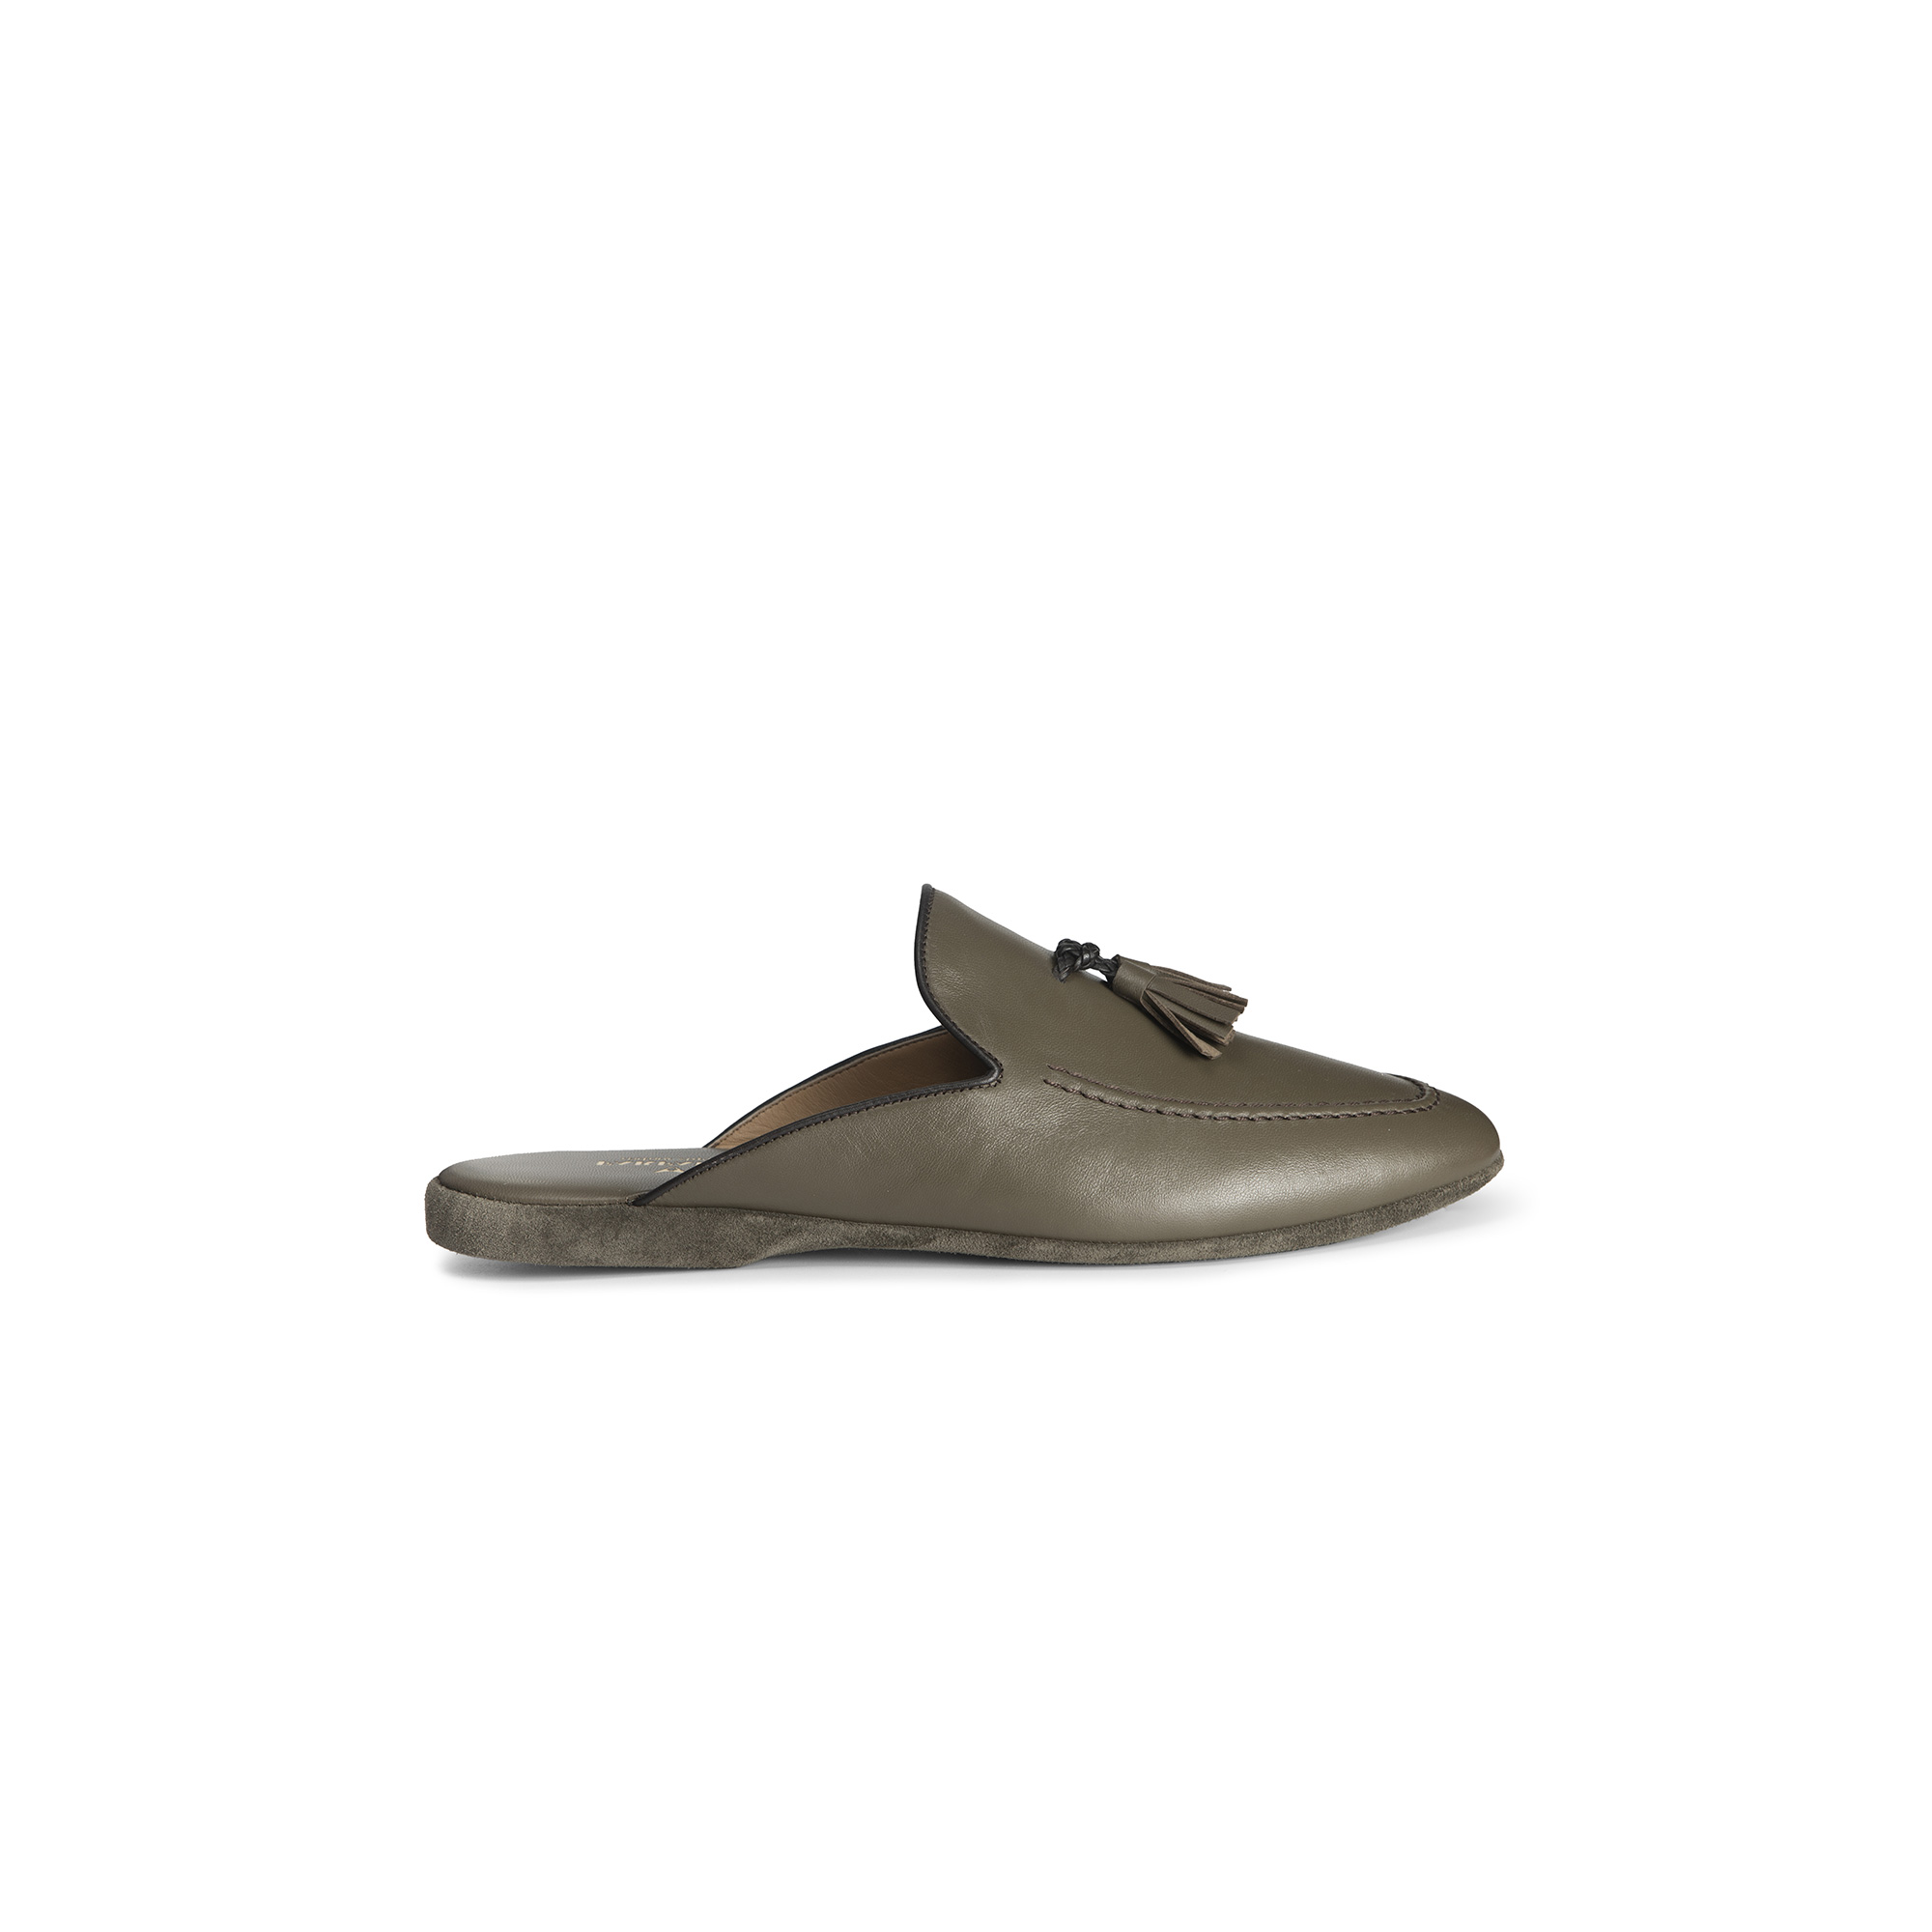 Pantofola aperta interno nappa tartufo - Farfalla italian slippers